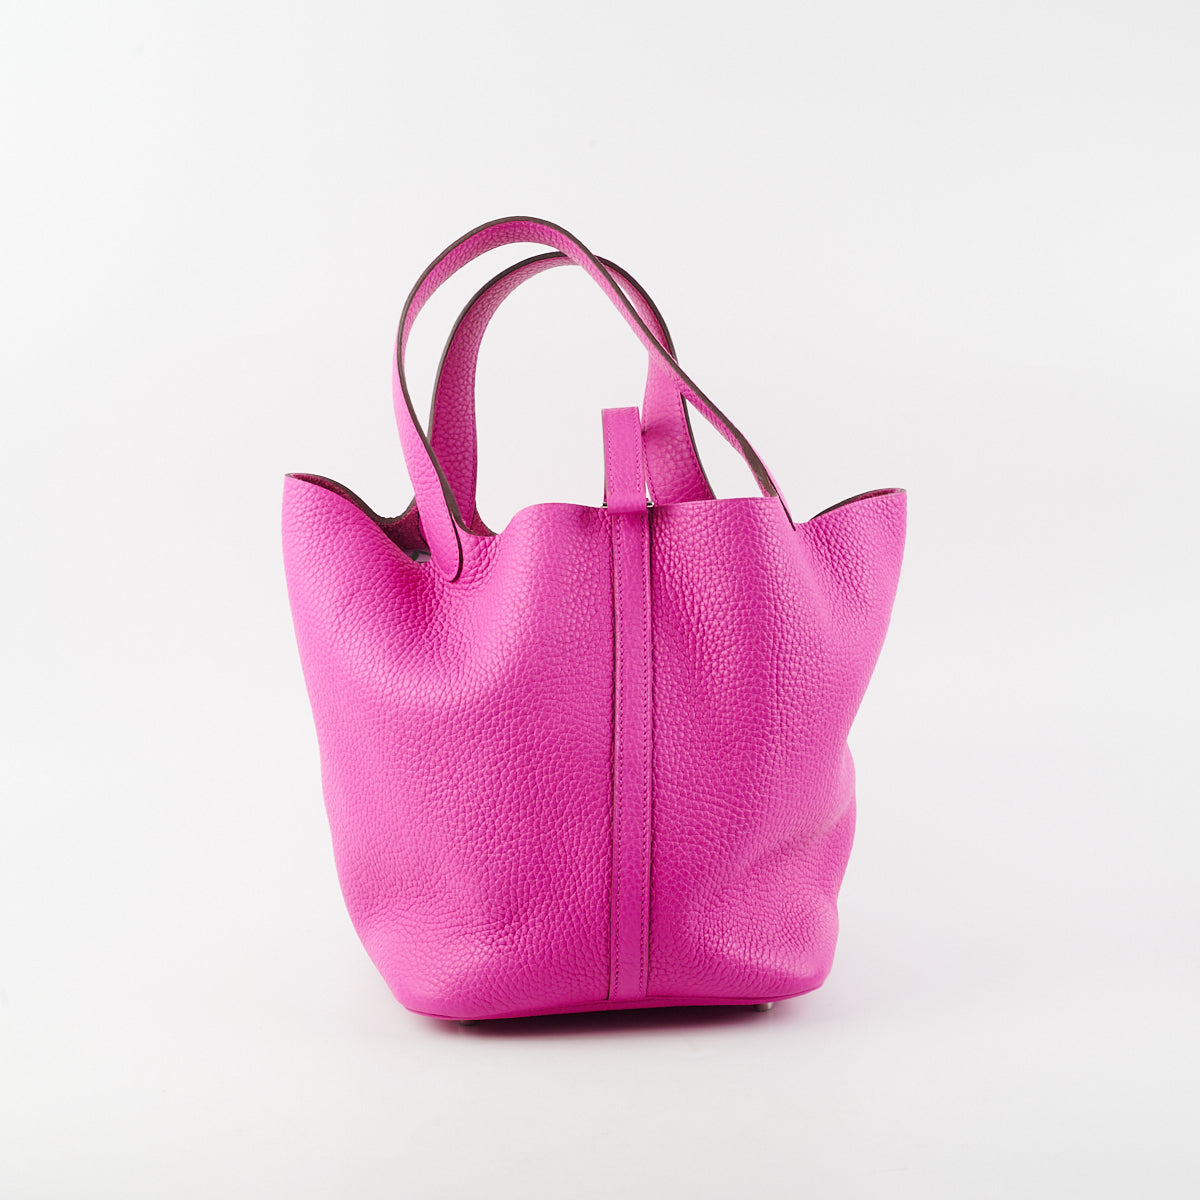 Shop HERMES Picotin Elegant Style Handbags by LifeinParis